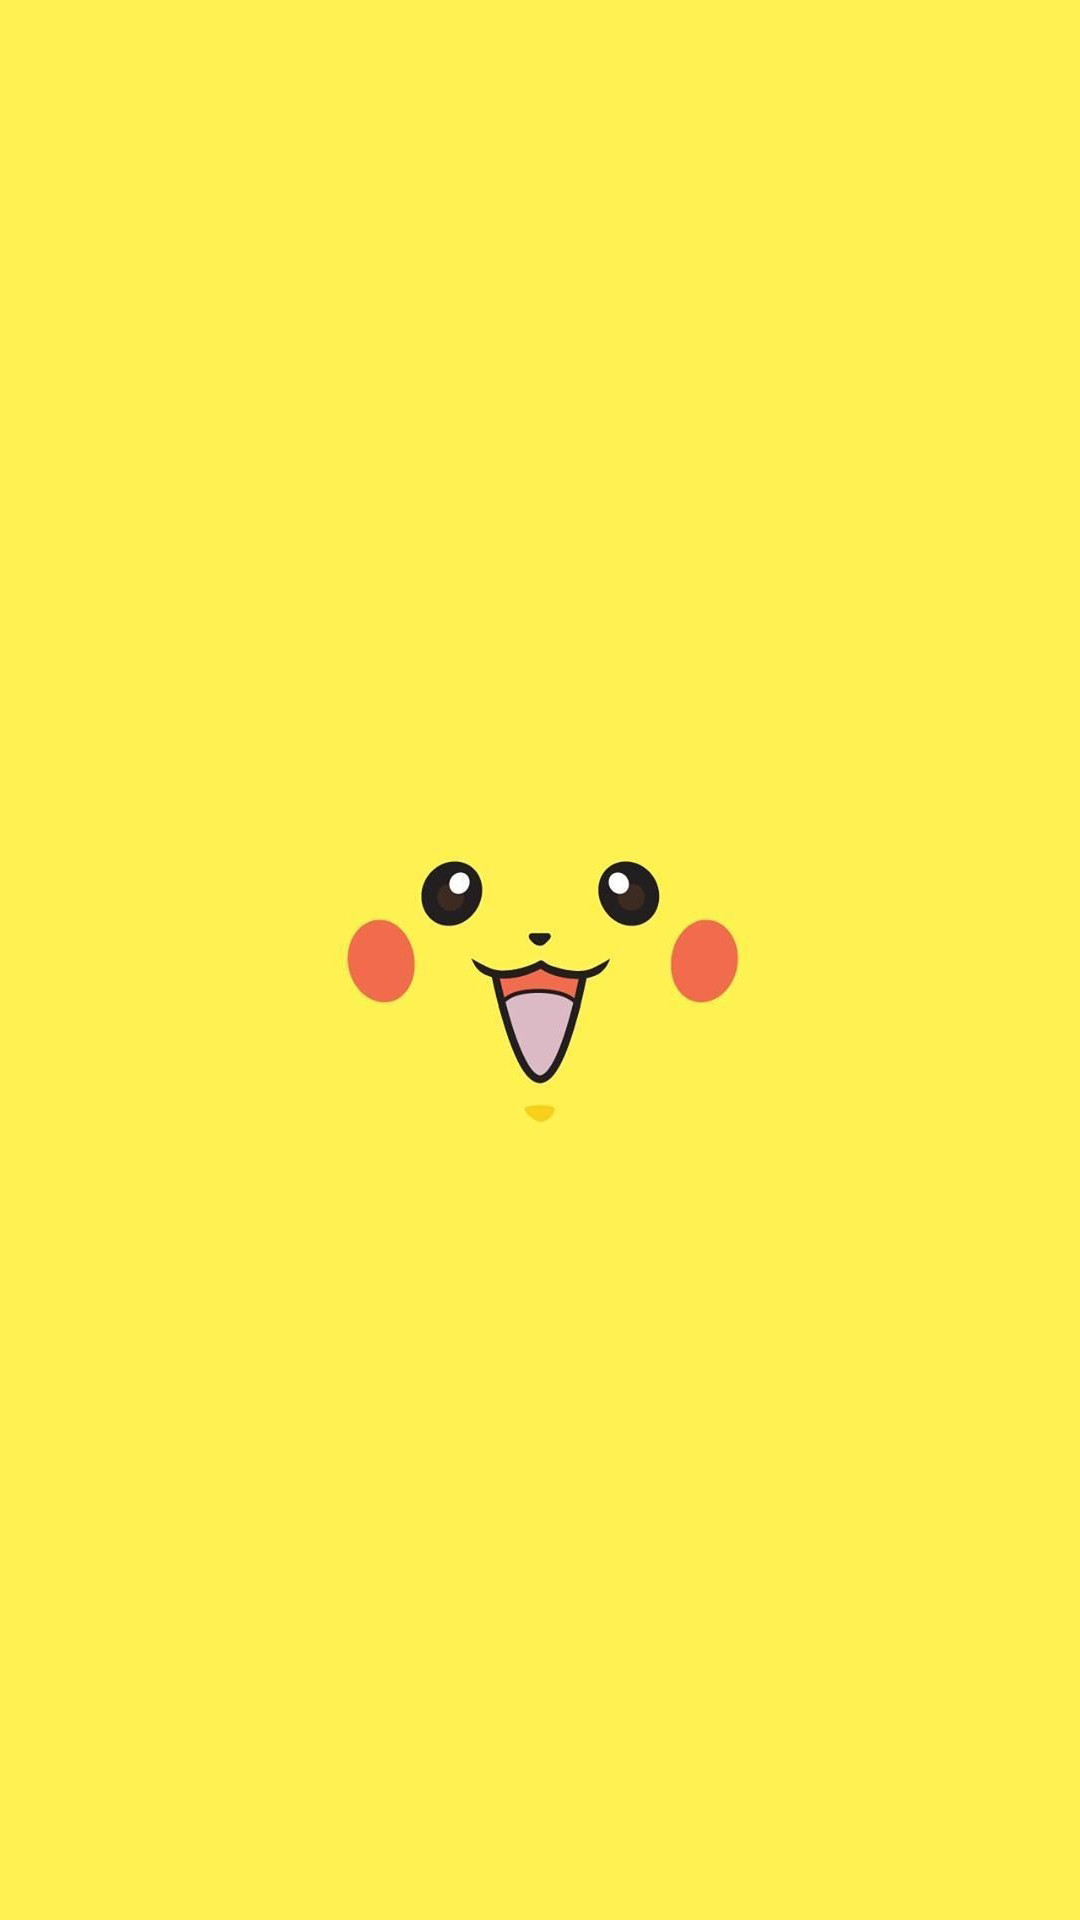 Pikachu wallpaper iphone 5